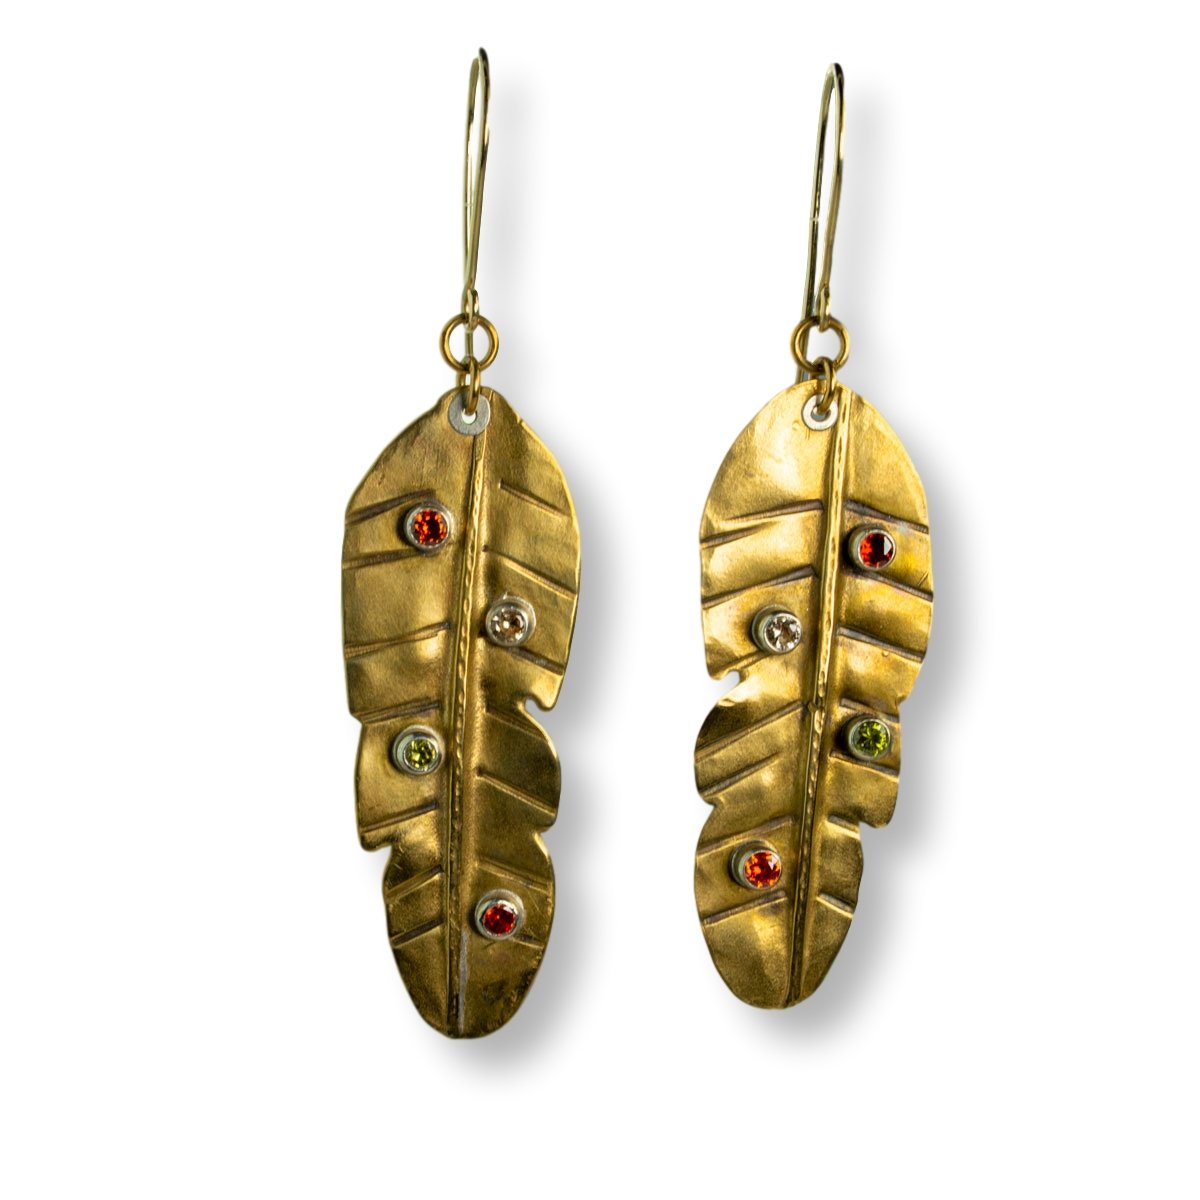 golden earrings with stones